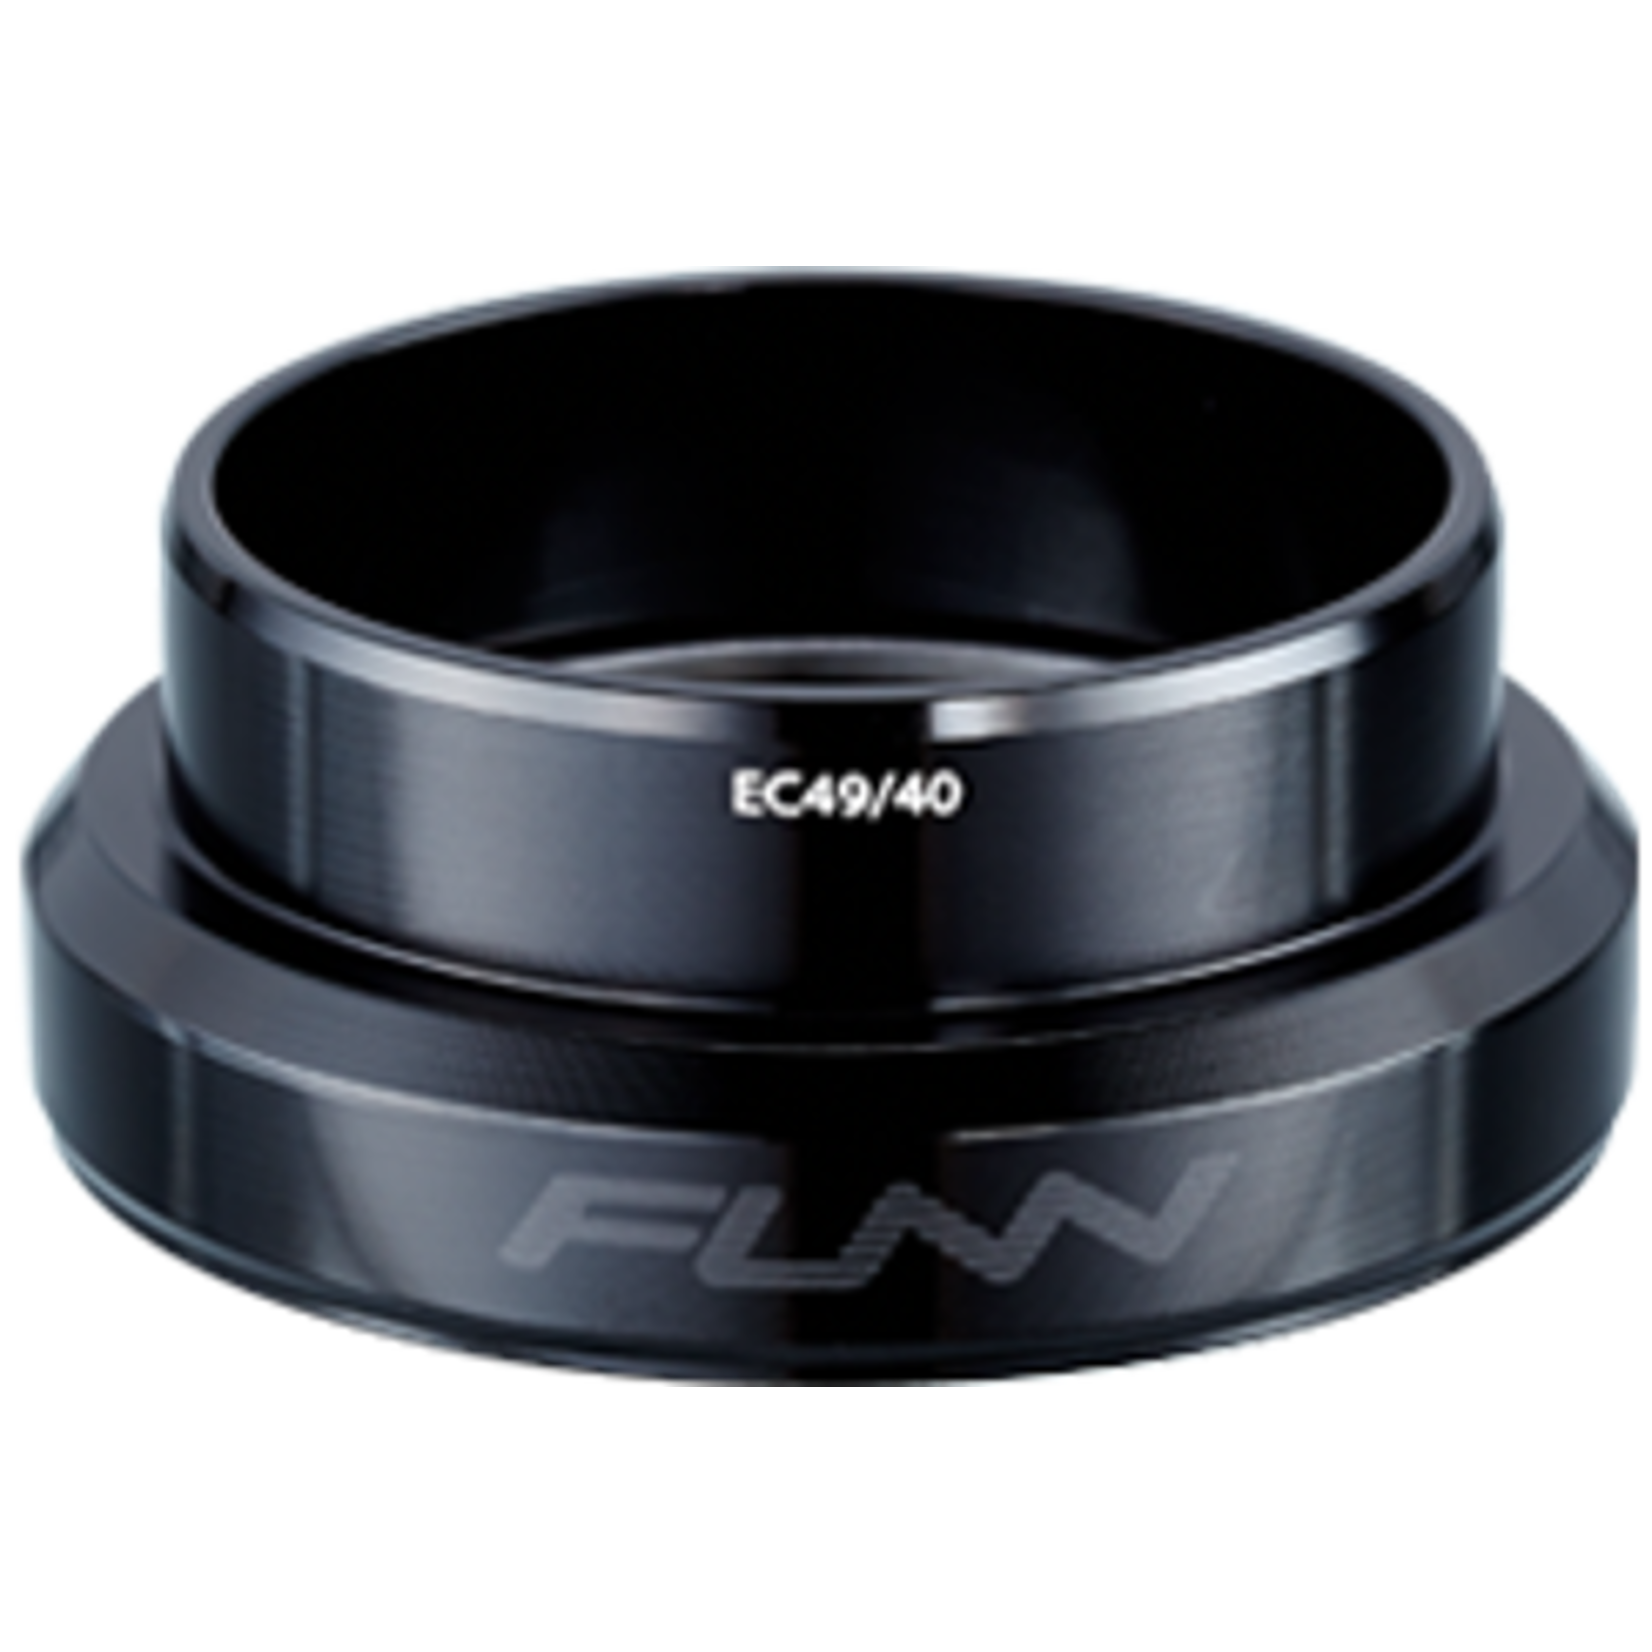 FUNN Funn Headset - Descend - Lower Cup Set With Top Cap-EC 49/40, External Cup-Black